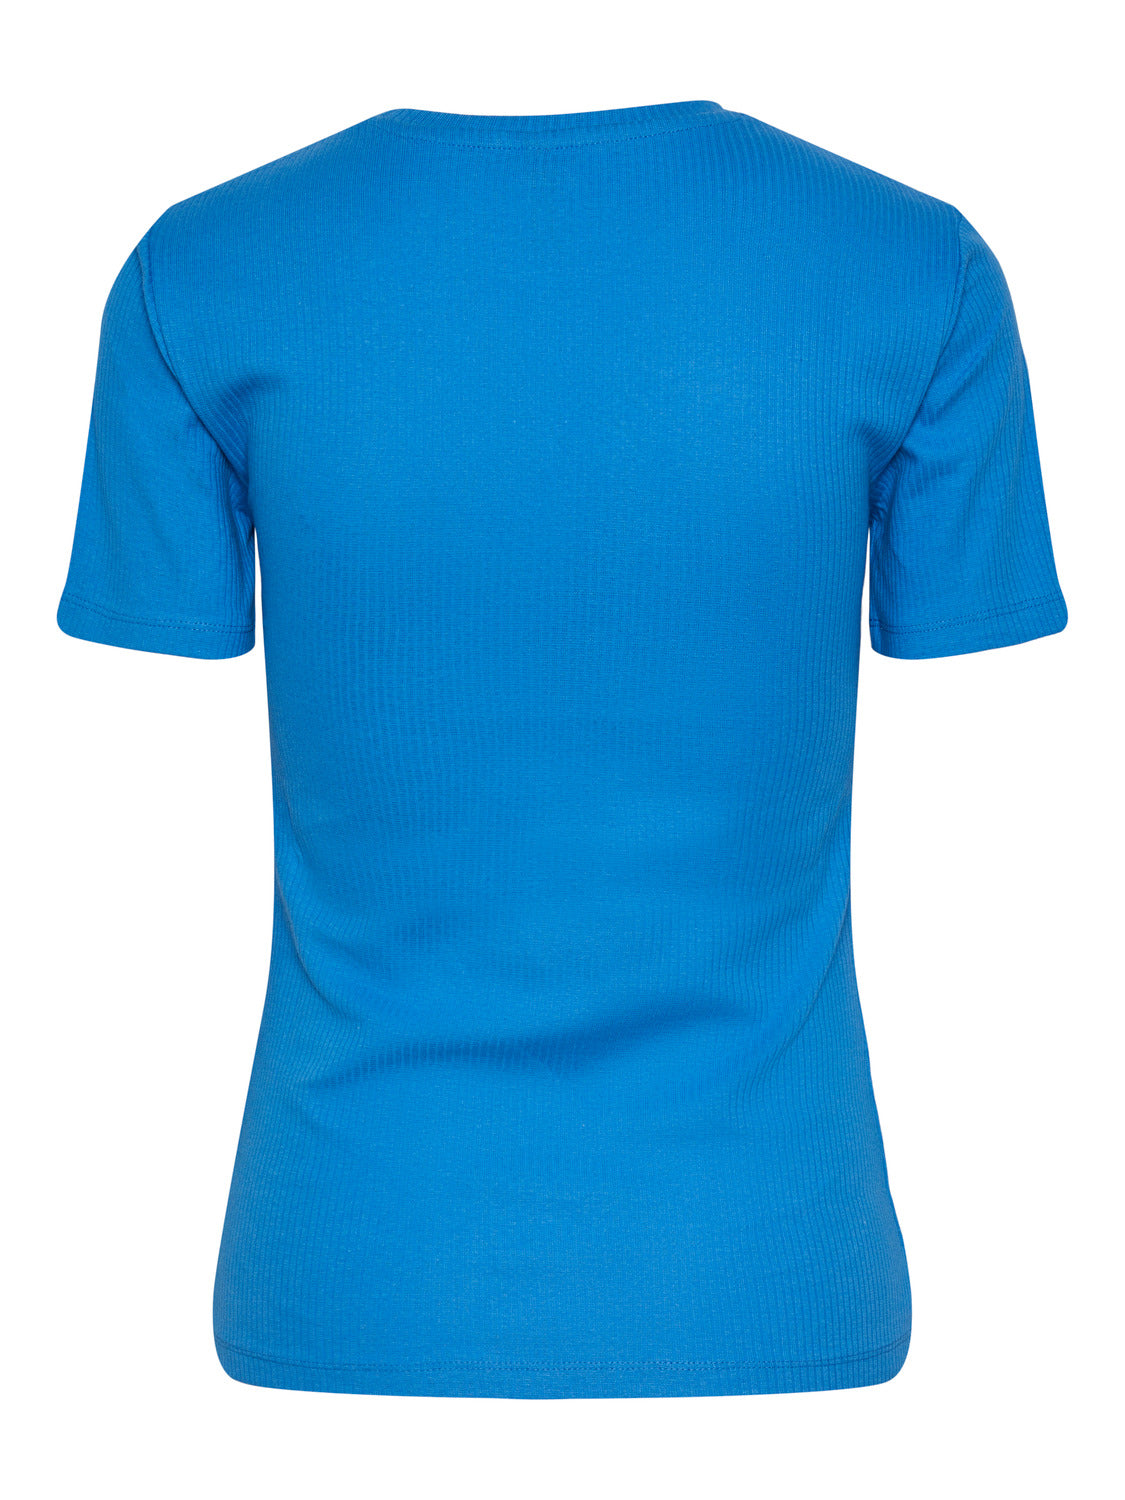 PCRUKA T-Shirt - French Blue